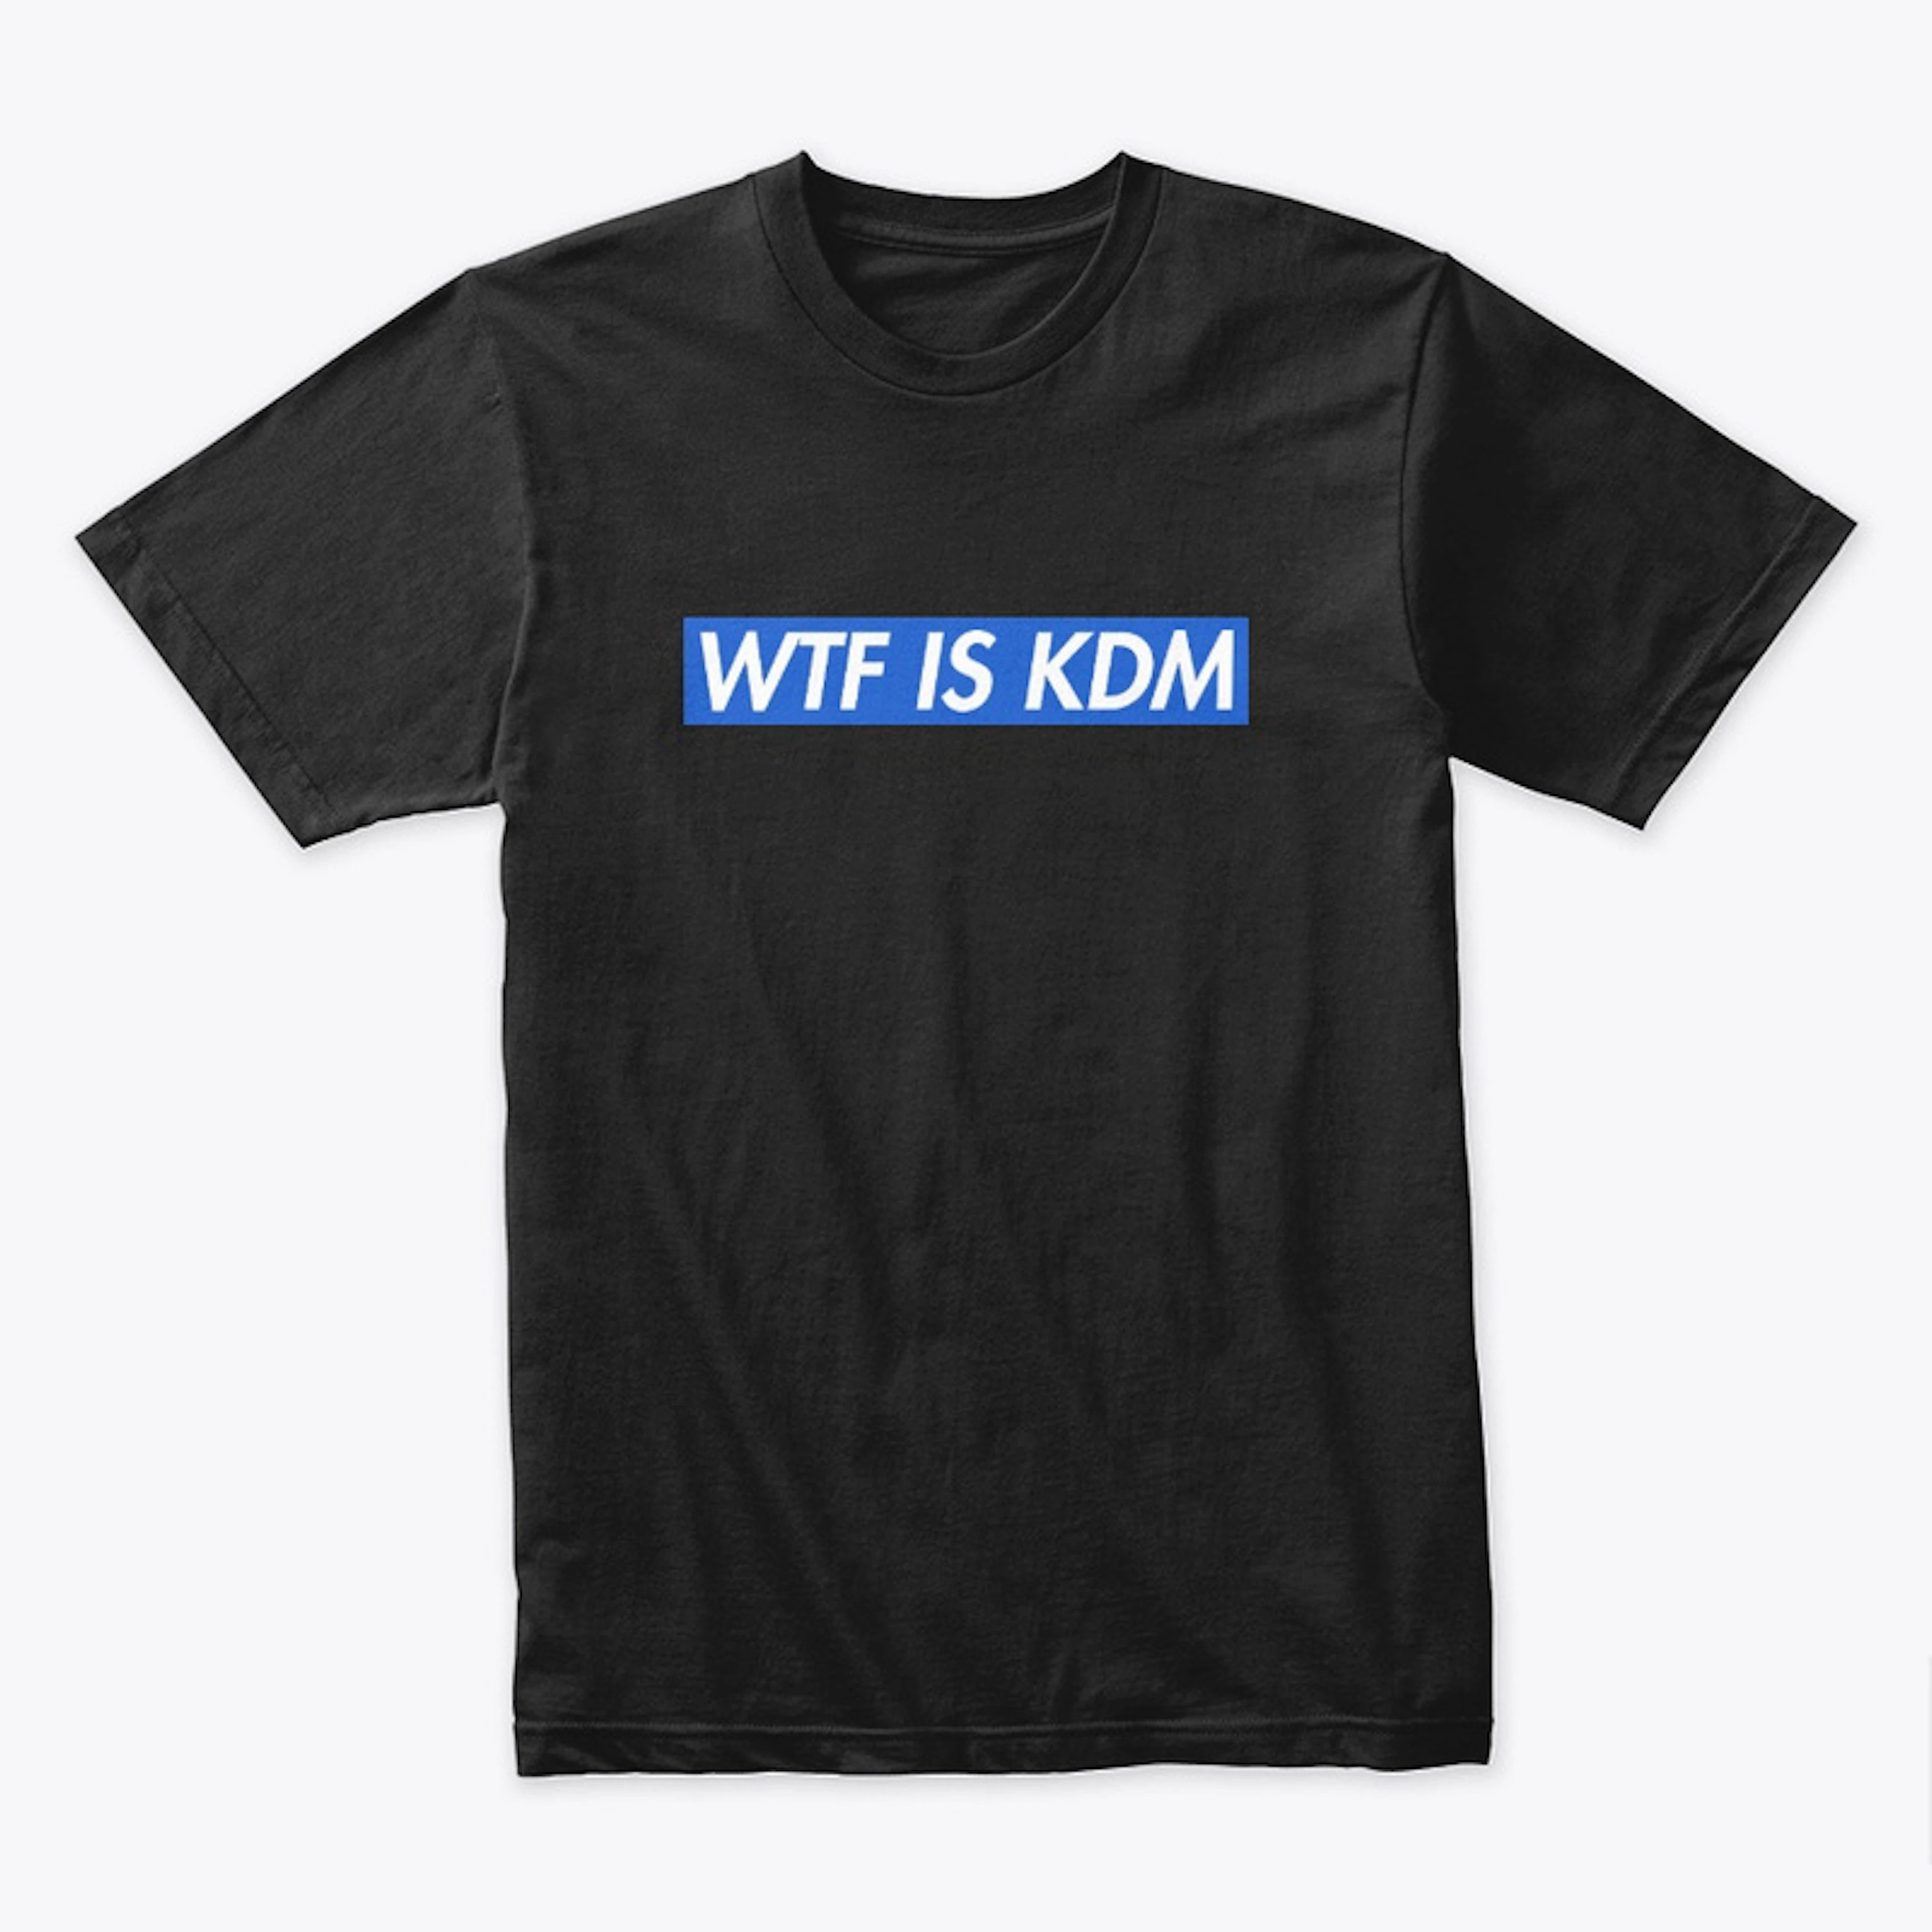 WTF IS KDM - Blue Version